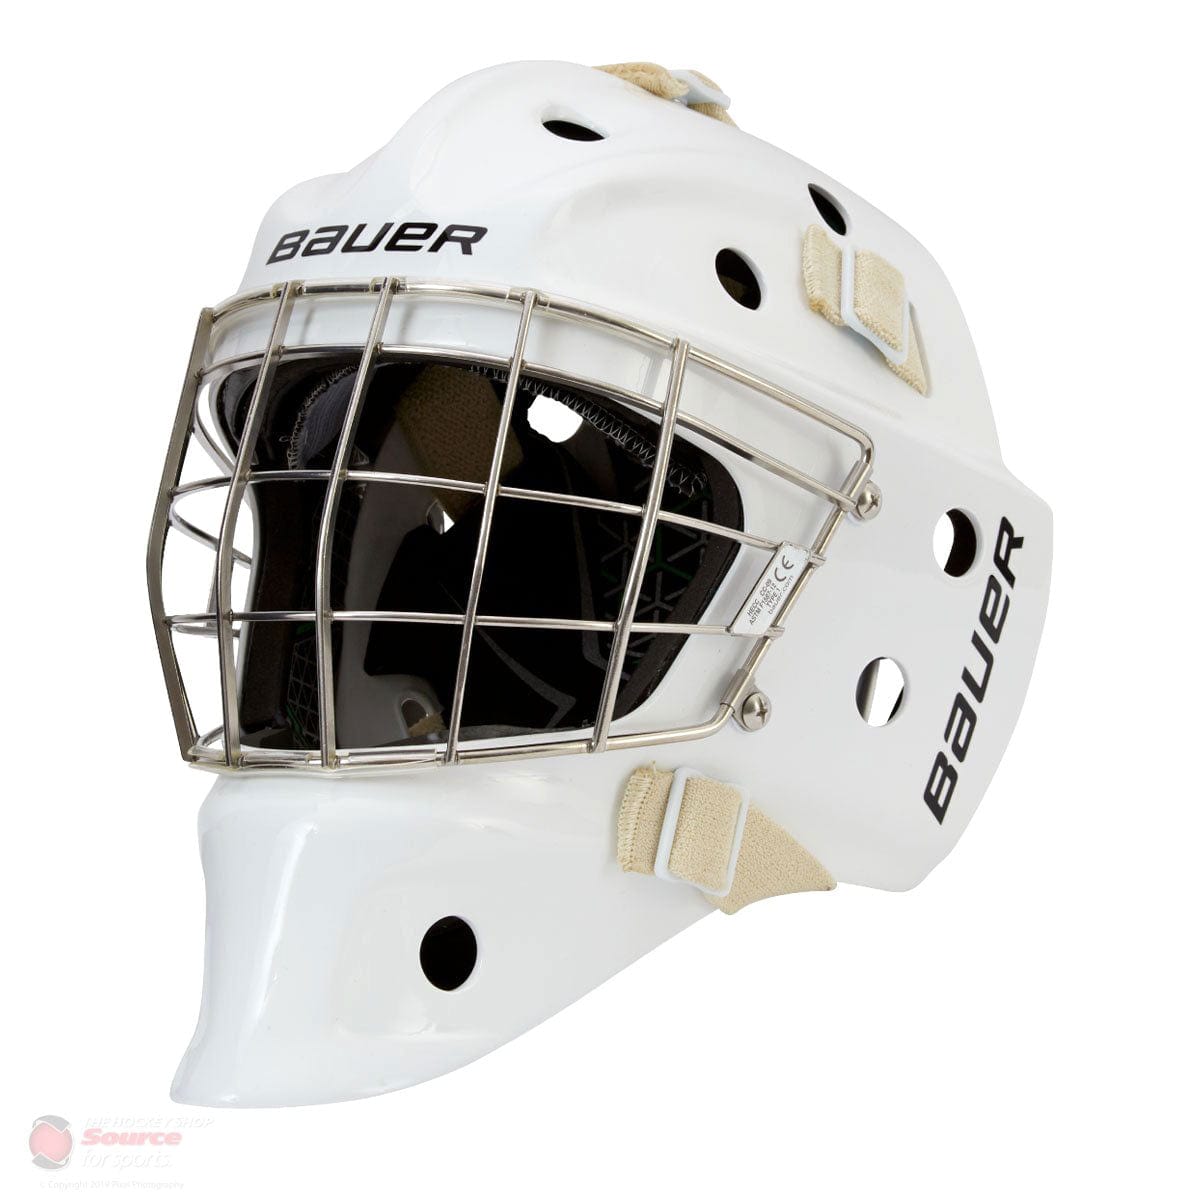 Bauer NME IX Senior Goalie Mask